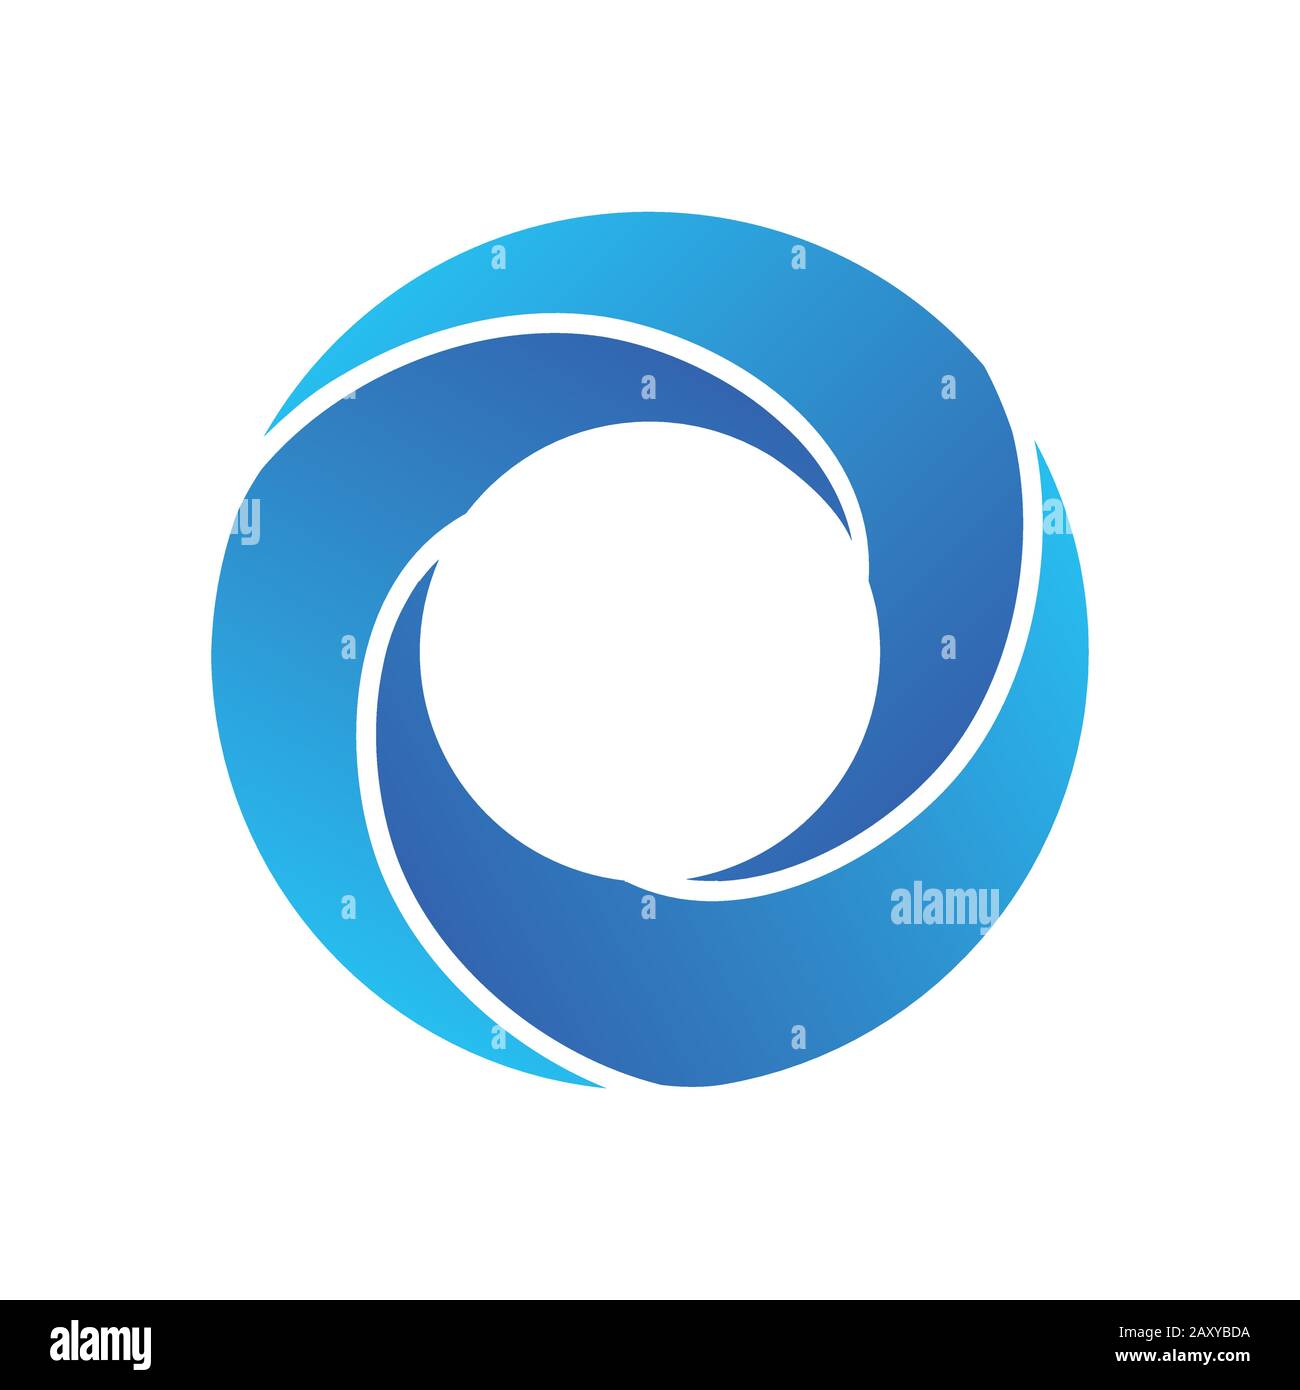 wave / whirlpool logo icon illustration Stock Vector